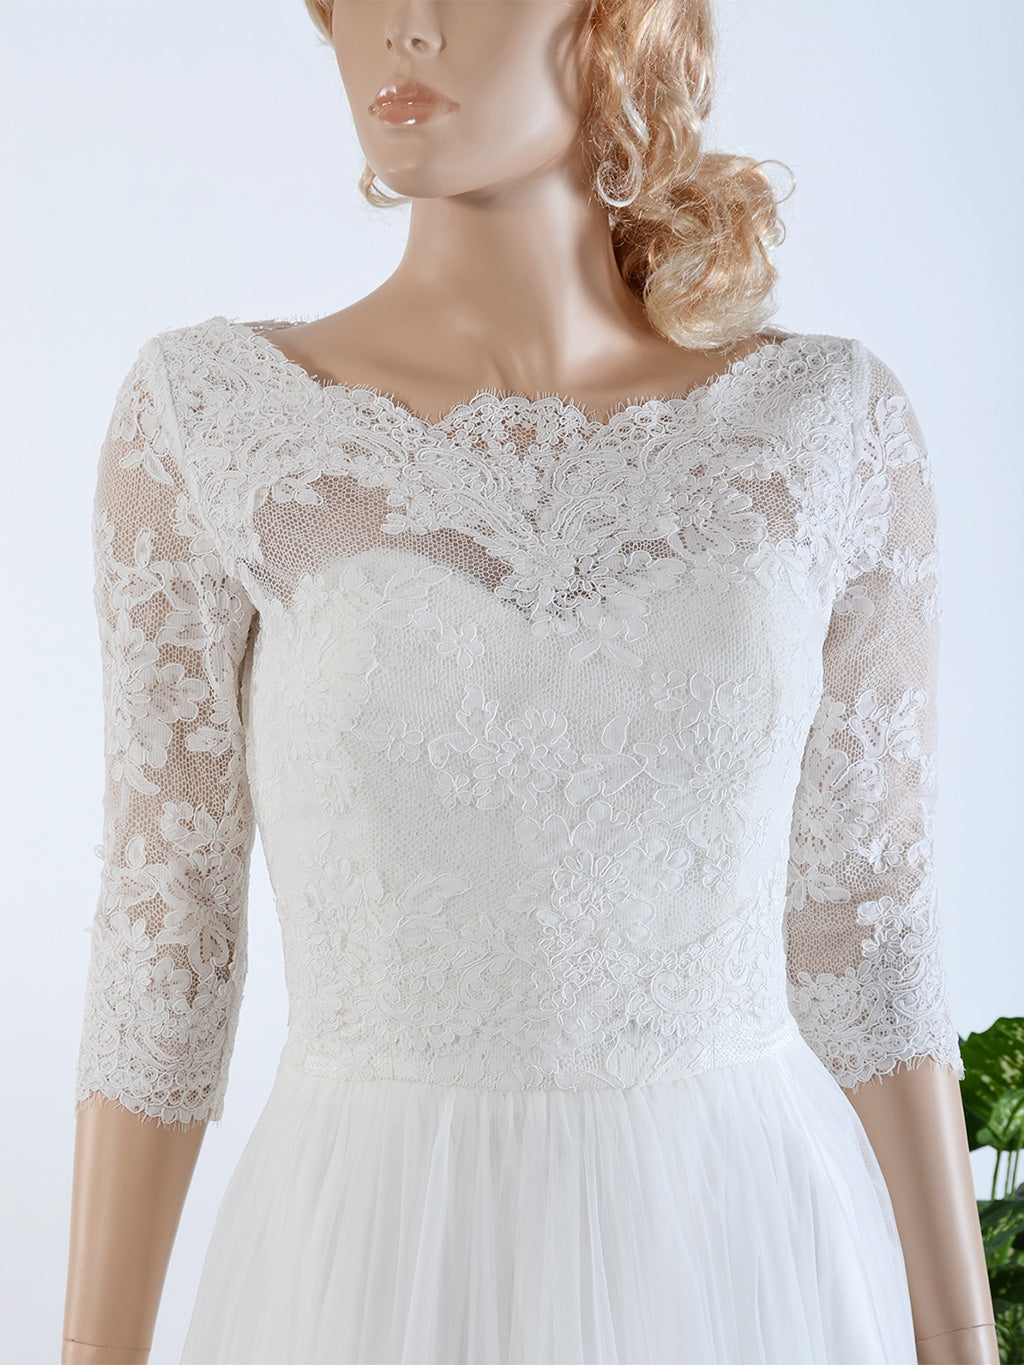 Bridal bolero lace wedding dress topper WJ021